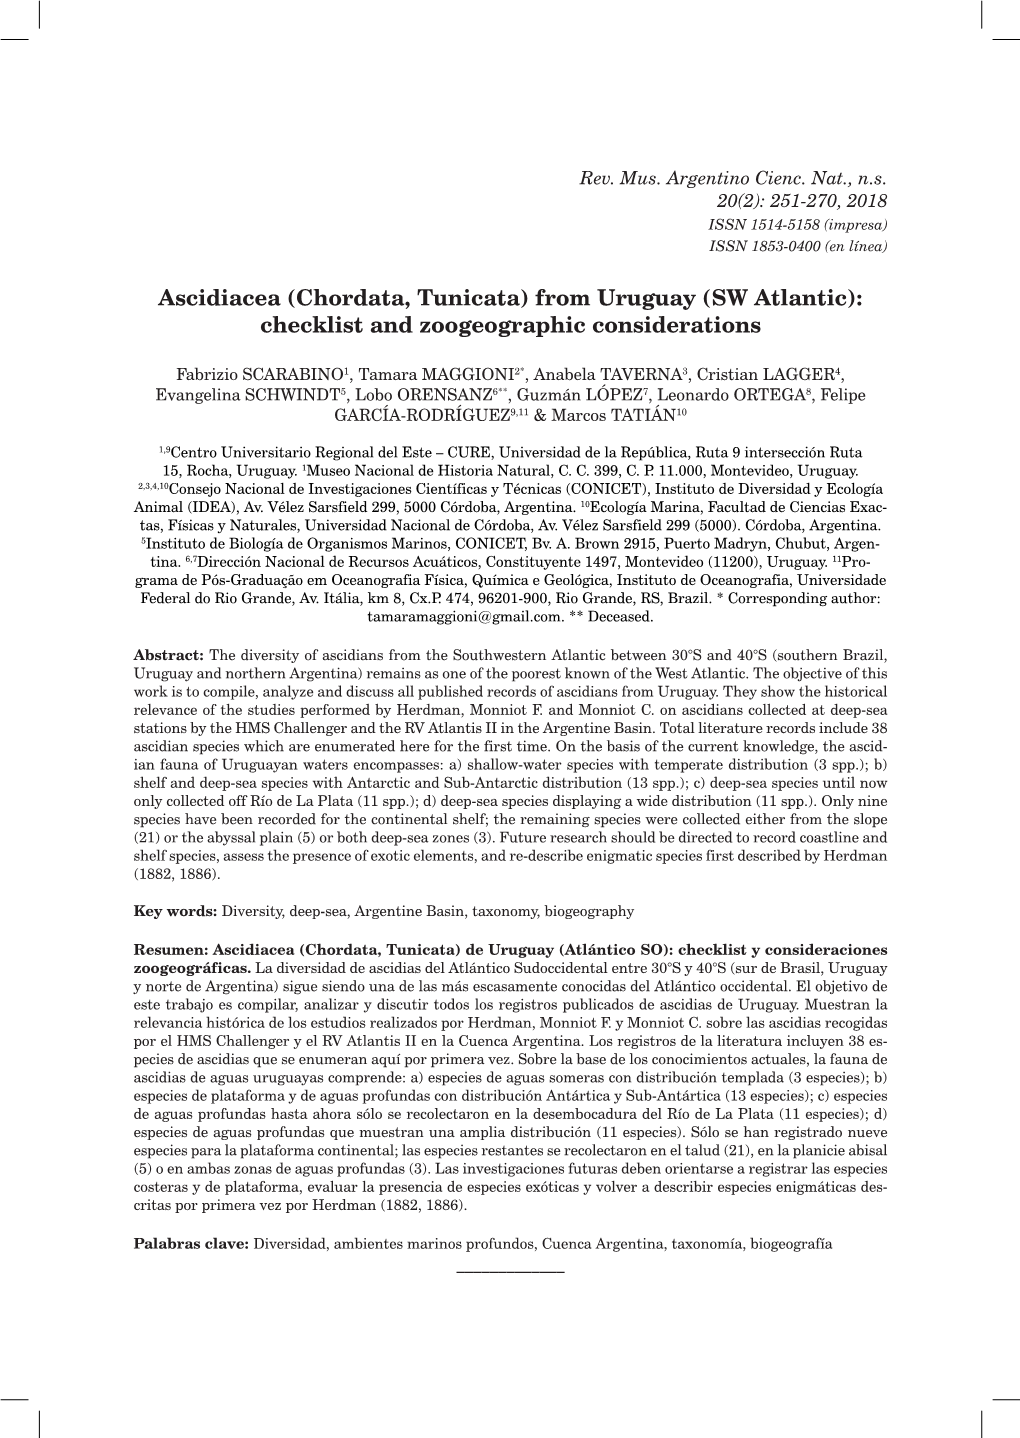 Ascidiacea (Chordata, Tunicata) from Uruguay (SW Atlantic): Checklist and Zoogeographic Considerations